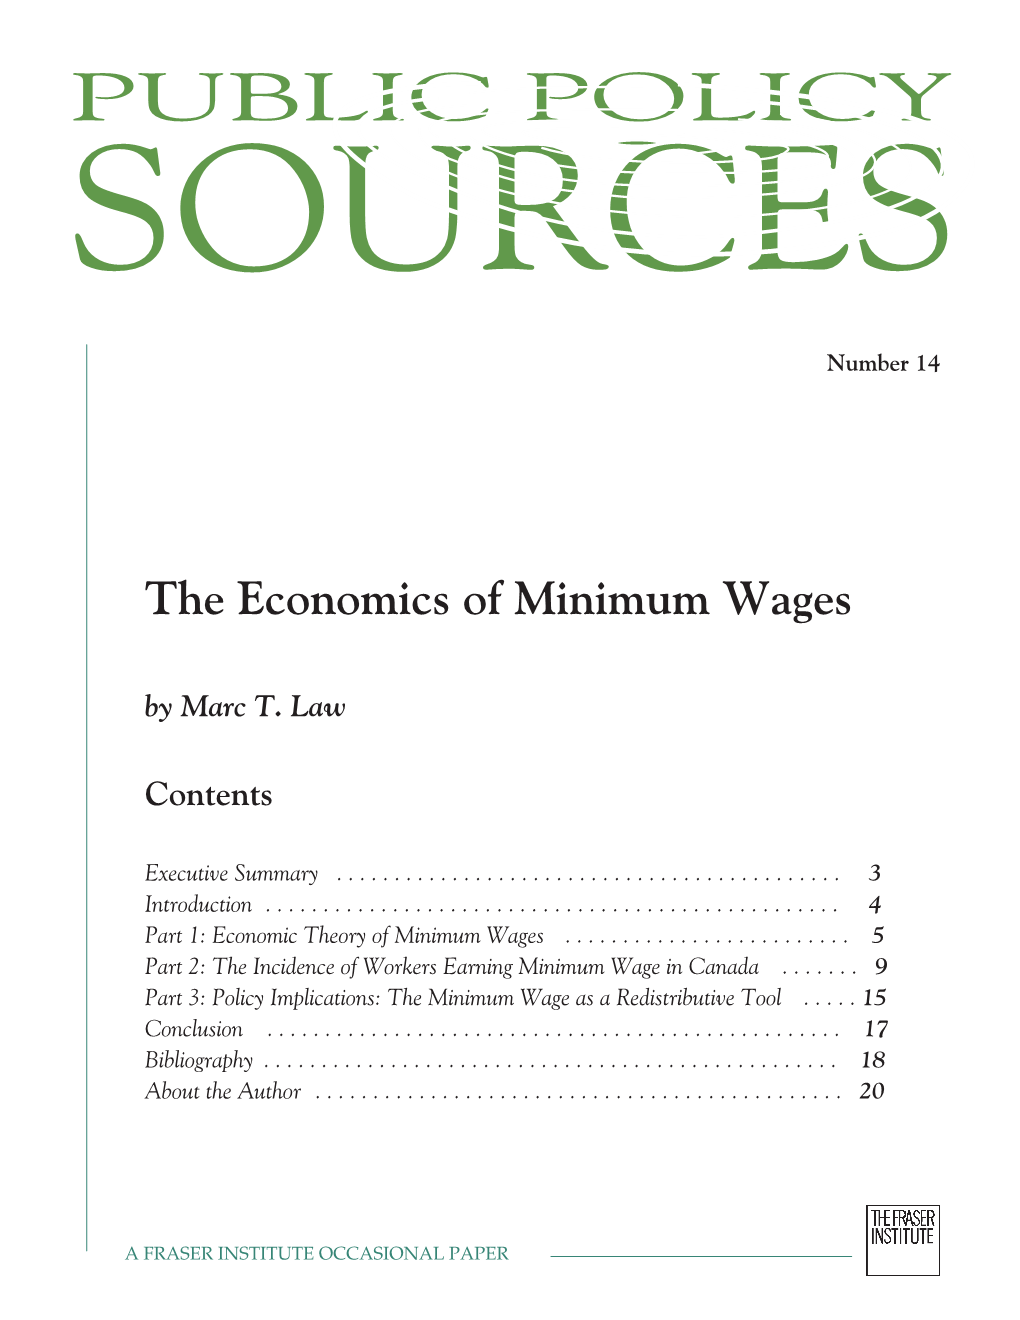 The Economics of Minimum Wages